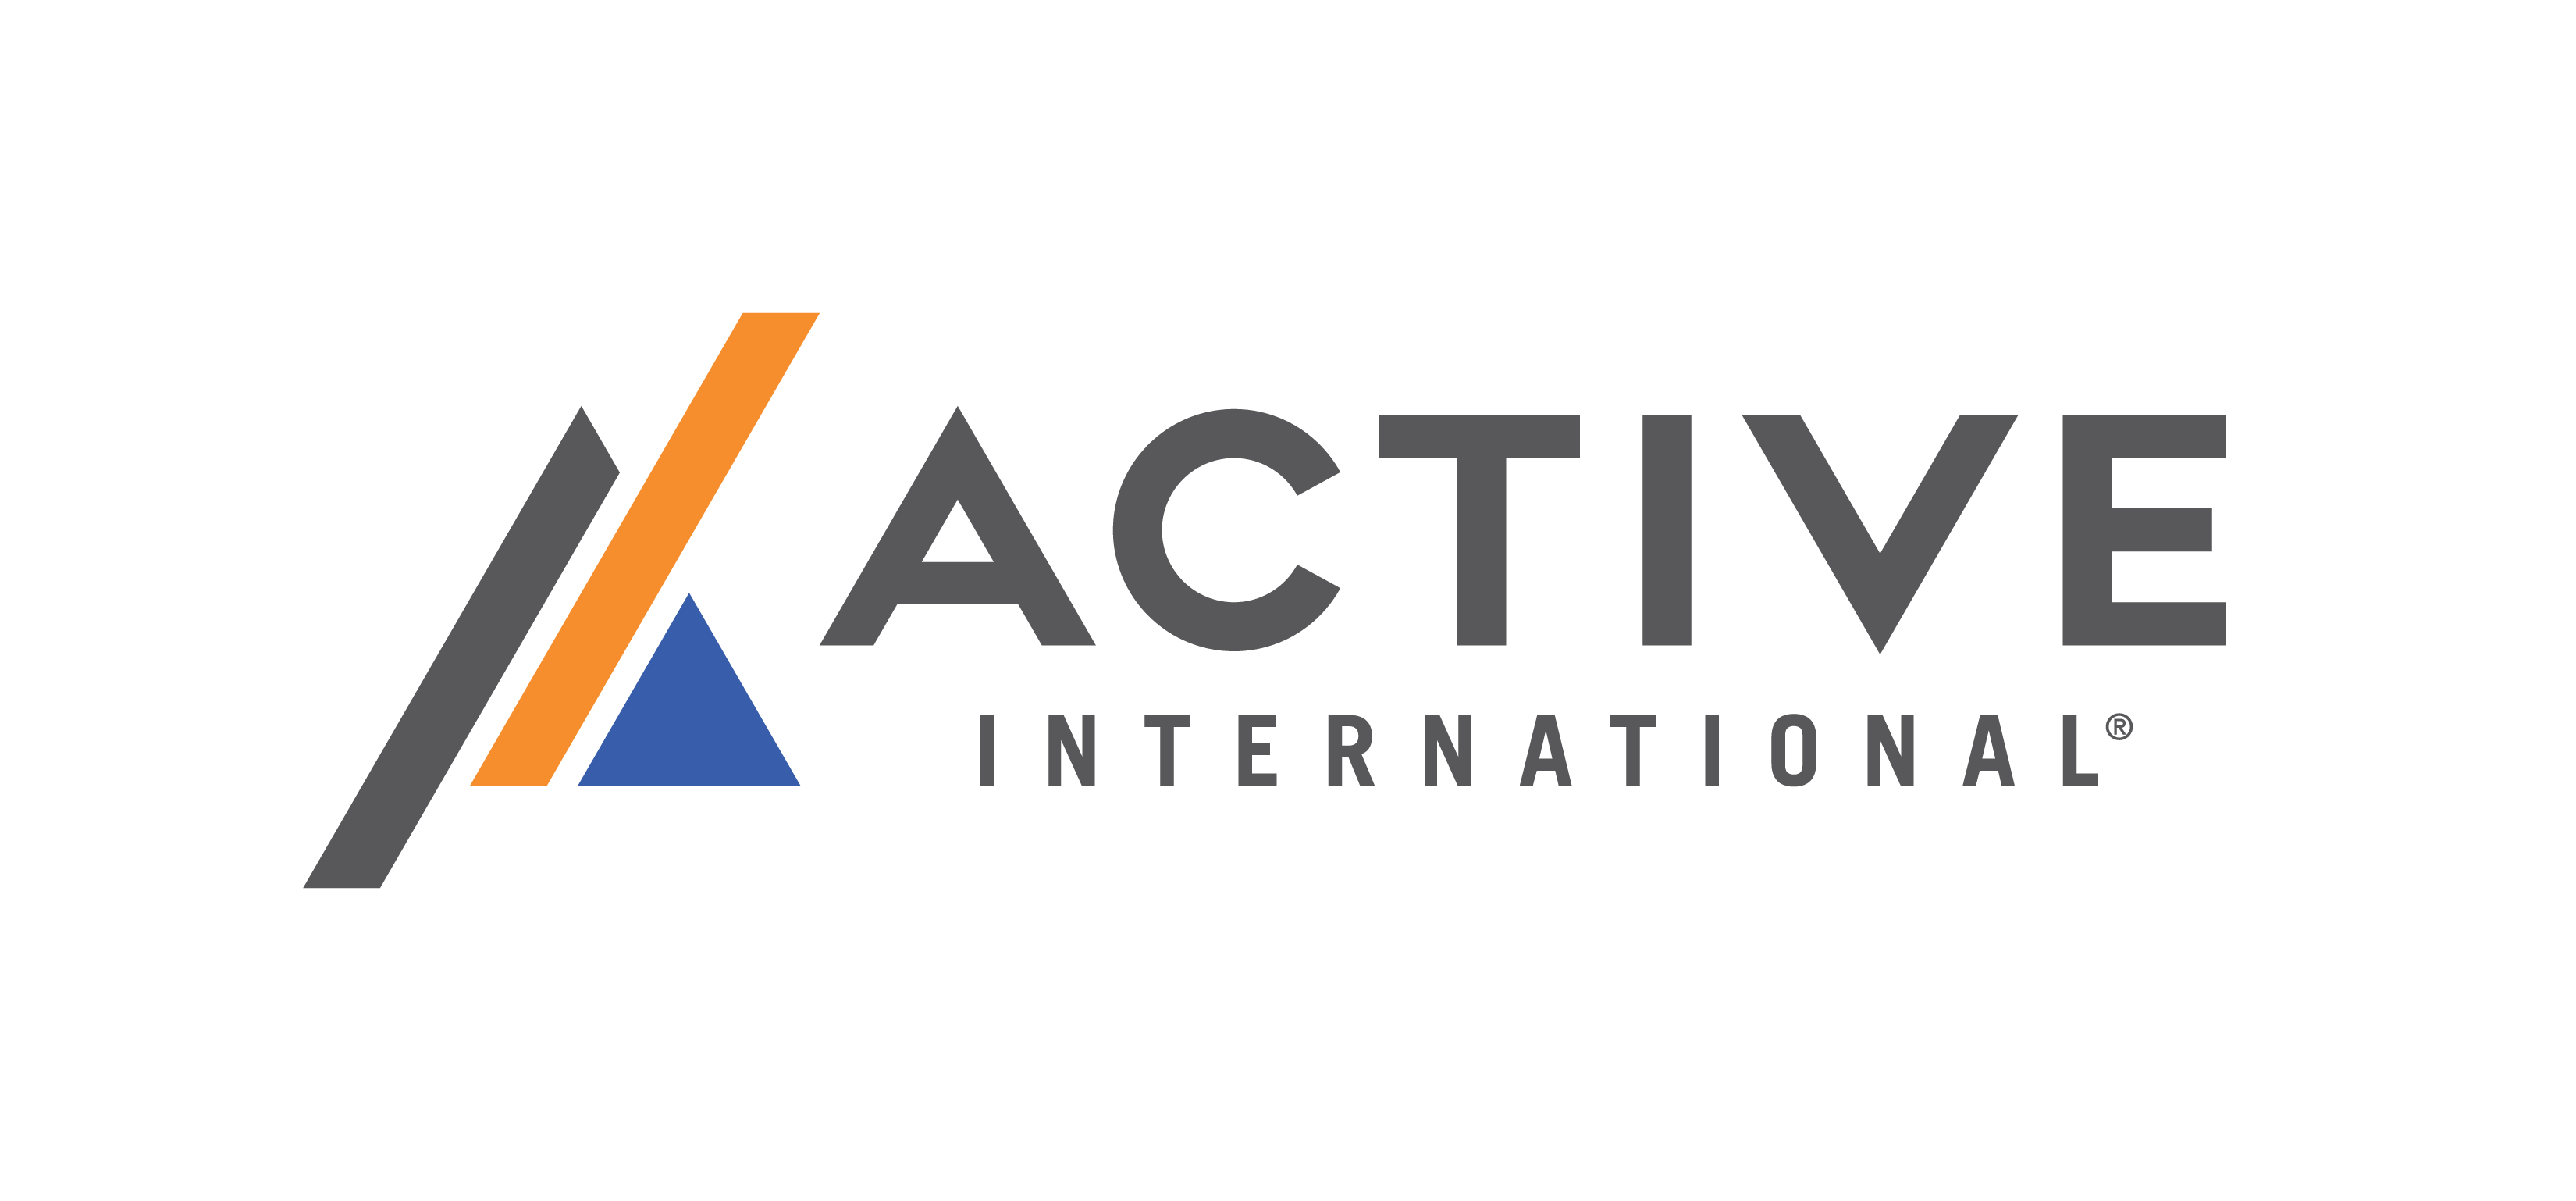 Active International - Primary - Grey + Colour